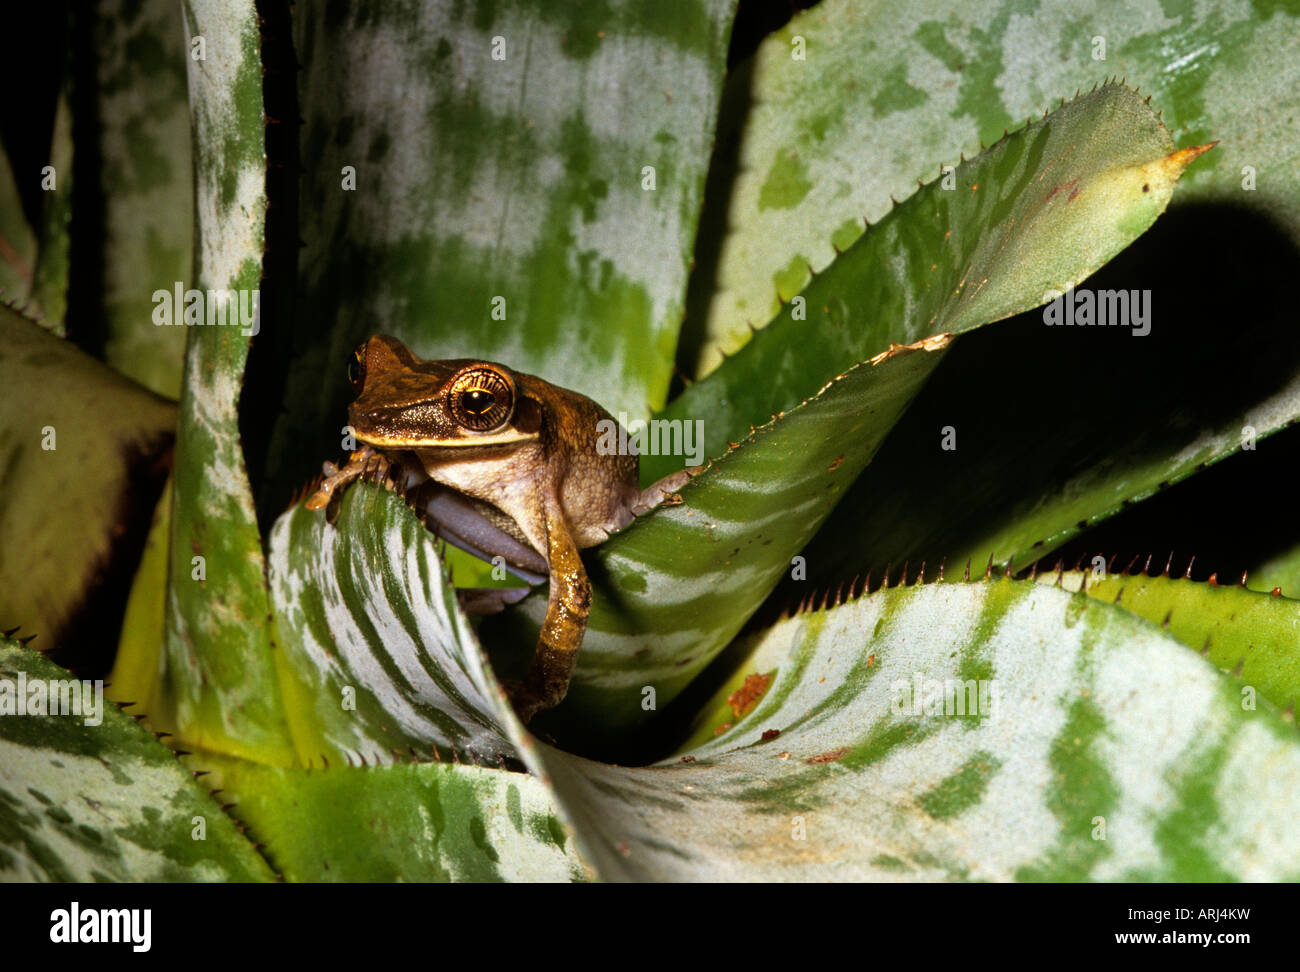 Amazon Rainforest. Laughing frog Osteocephalus sp. Stock Photo